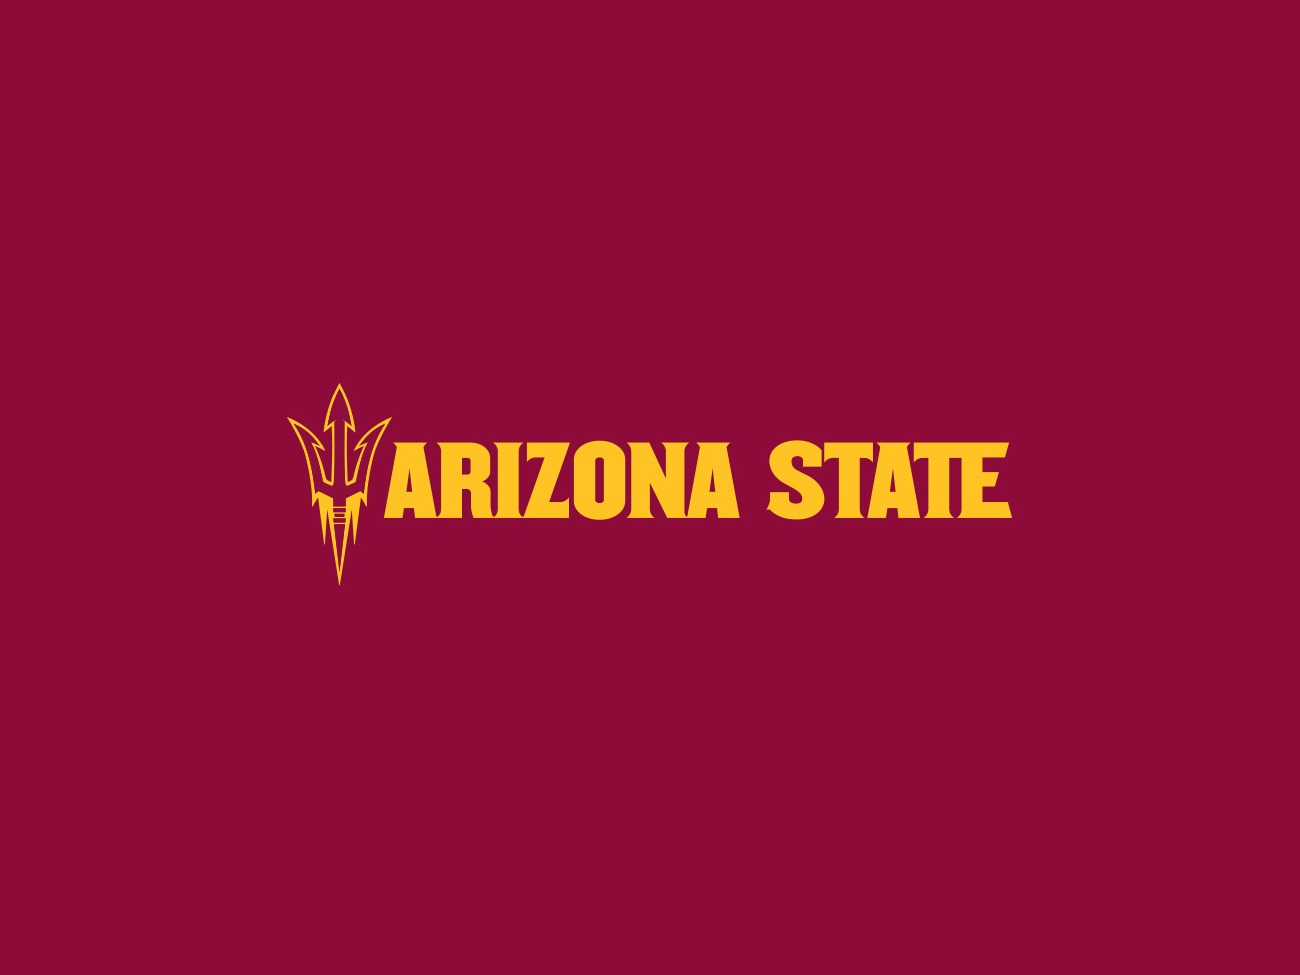 Arizona State University Branding and Font Design